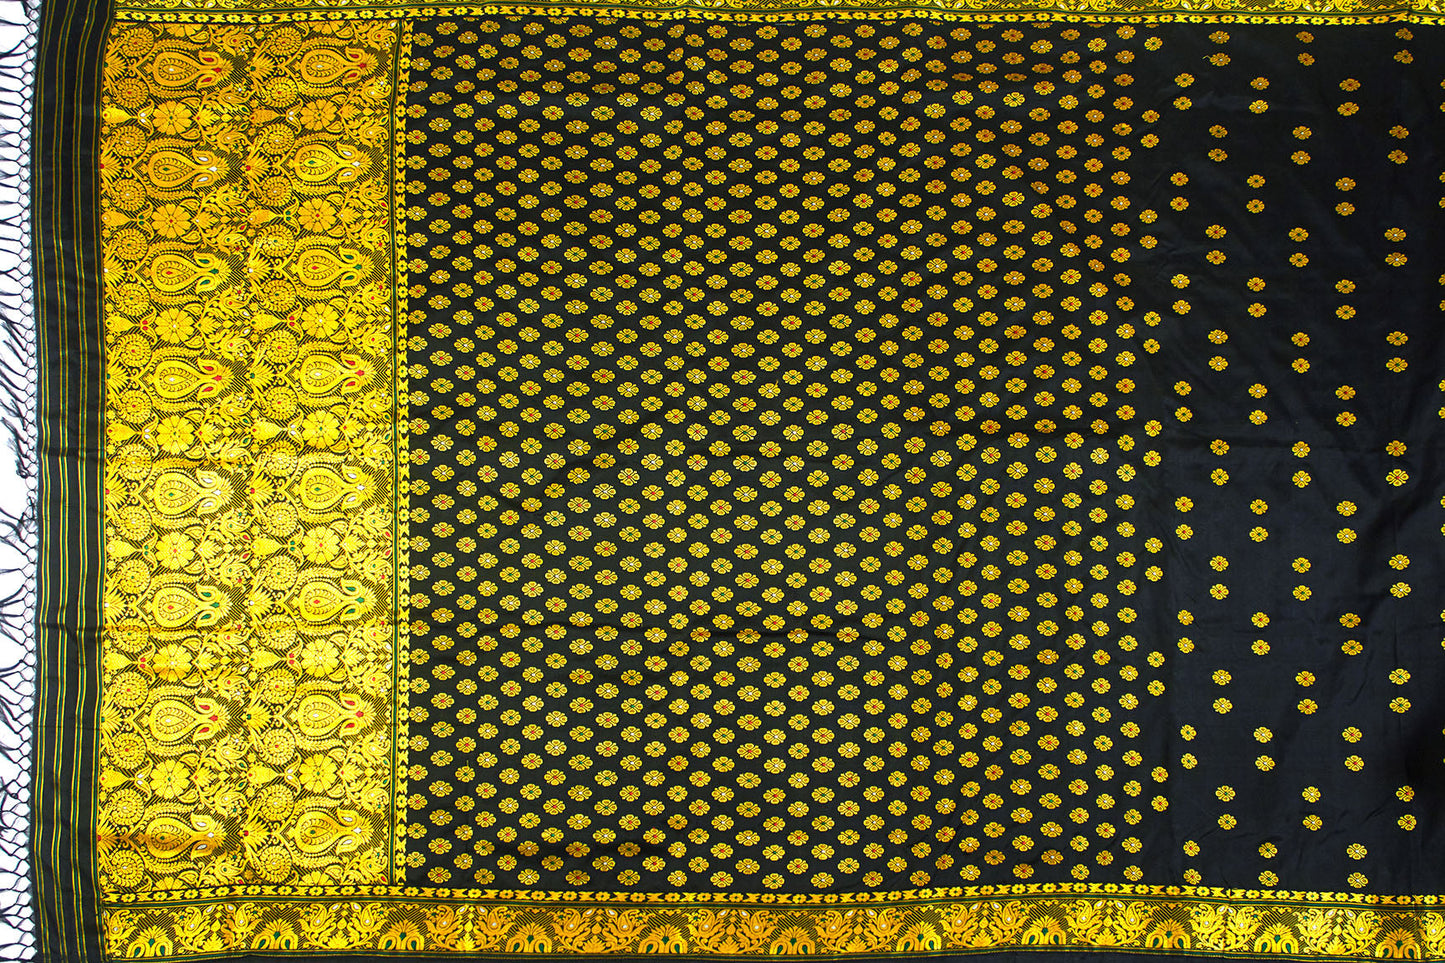 Black & Gold Flower Assam Pat Handloom Silk Sari (Made to order)